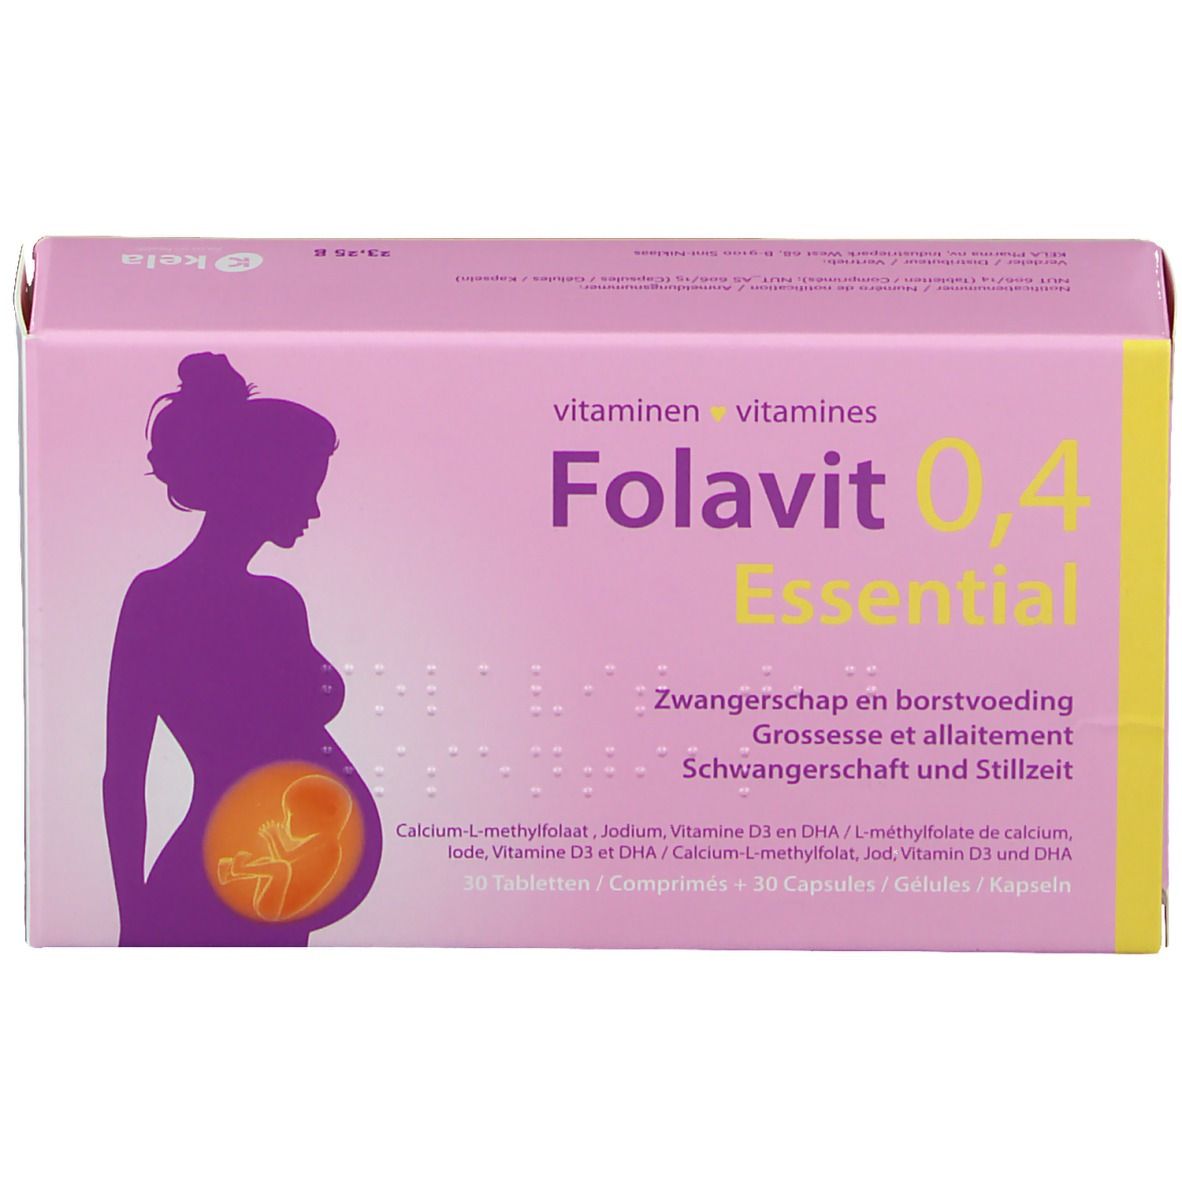 Folavit 0,4 Essential